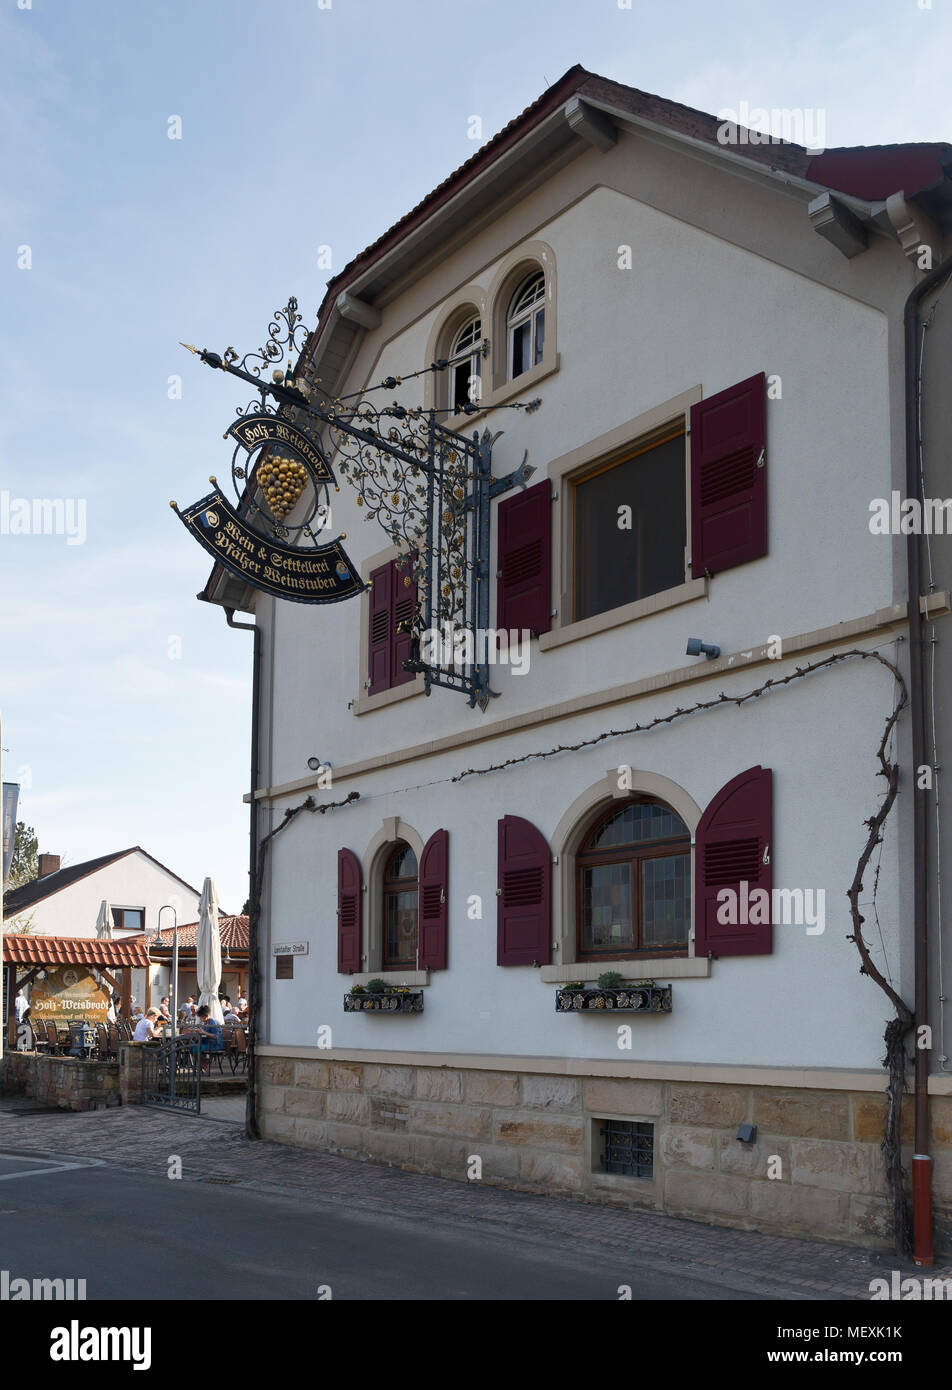 Vinery, restaurant et hôtel dans Holz-Weisbrodt Boll, Rheinland-Pfalz, Allemagne, Europe Banque D'Images